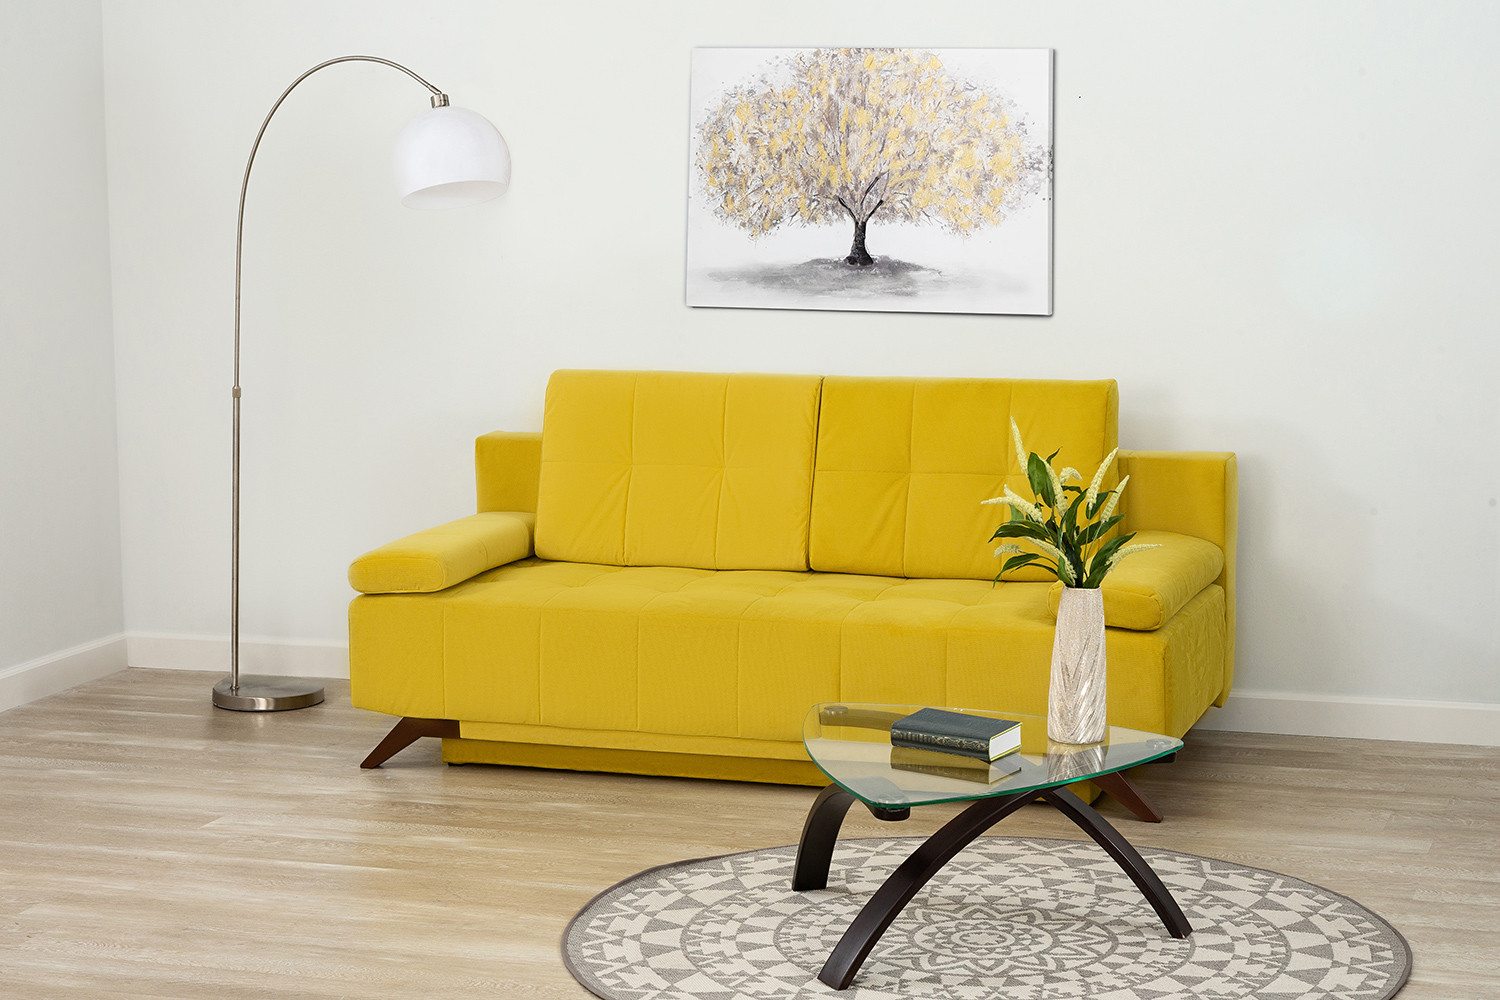 Мебель маленькие диваны. Диван Баден Баден желтый. Желтый диван хофф. Желтый диван икеа. Диван Баден Баден горчичный.